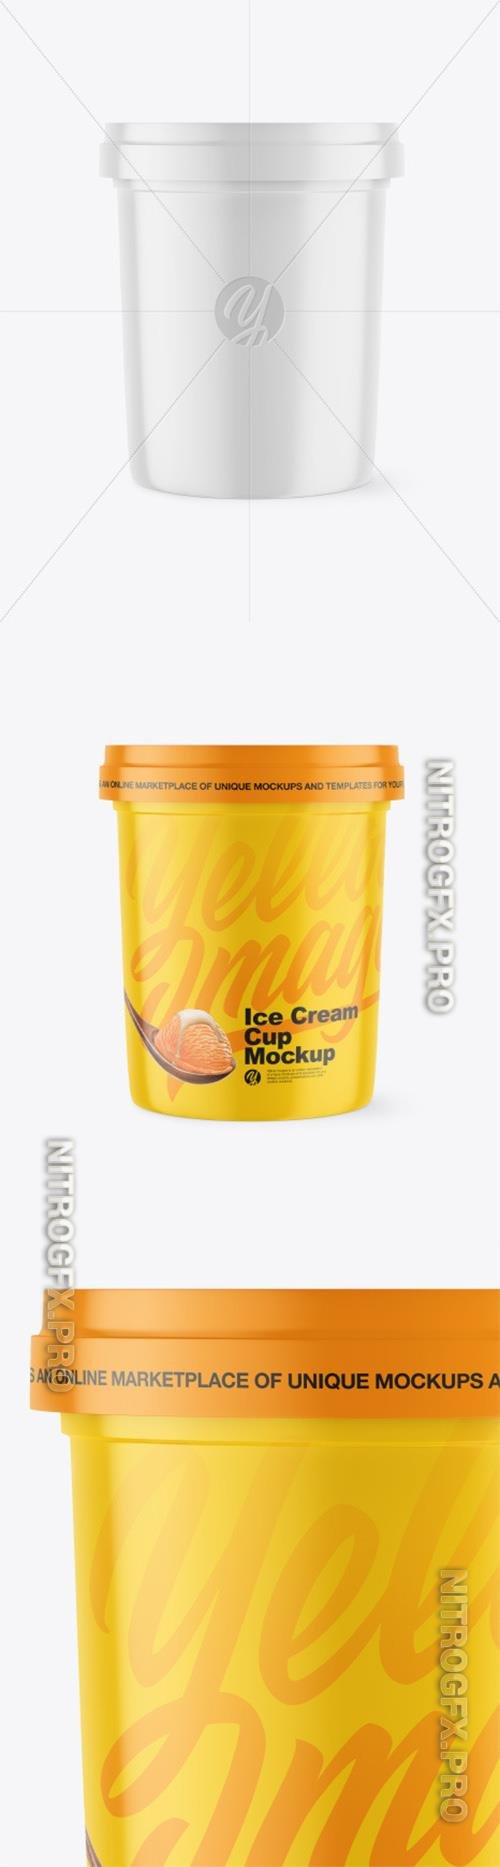 Glossy Ice Cream Cup Mockup 88384